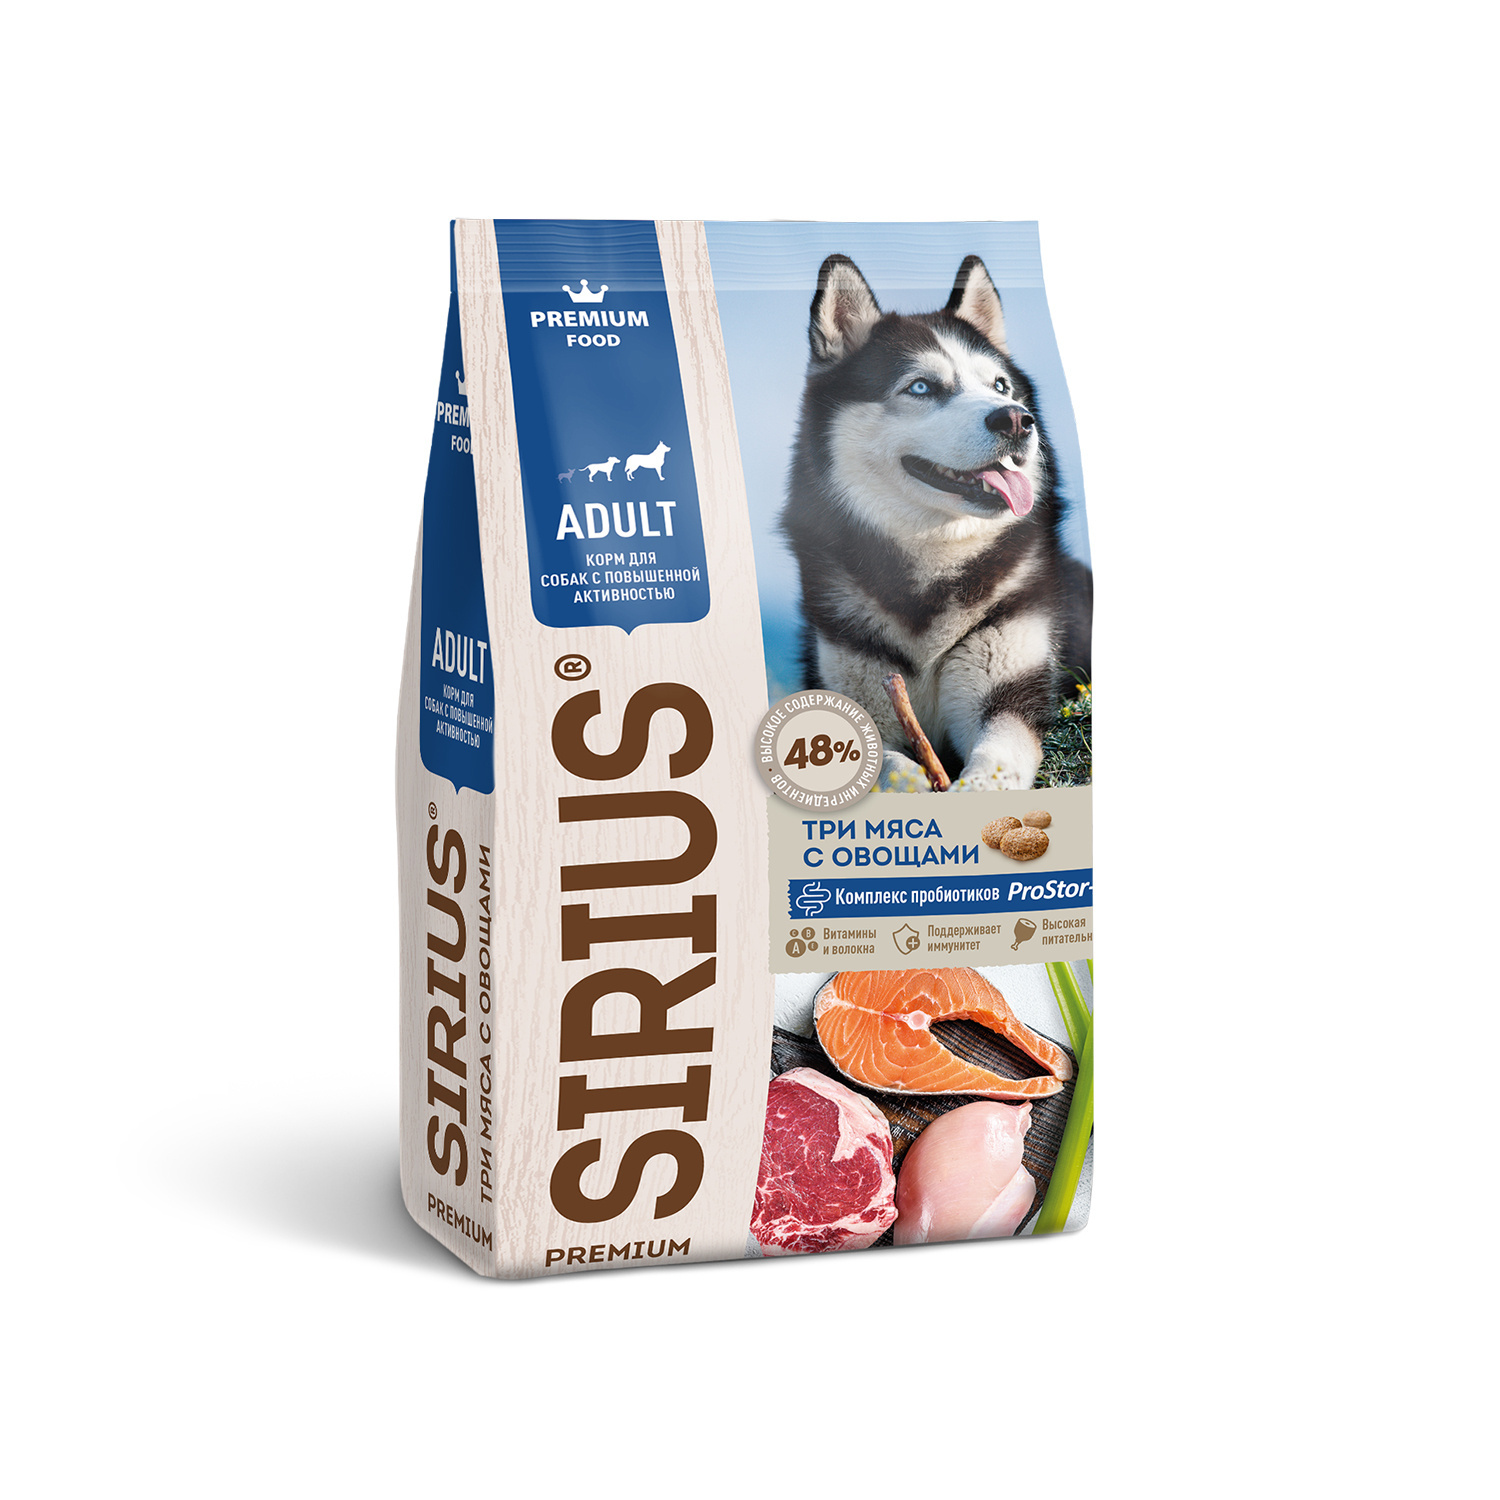 Sirius Sirius сухой корм для собак с повышенной активностью, три мяса с овощами (2 кг) сухой корм для собак sirius 3 мяса с овощами при повышенной активности 2 кг